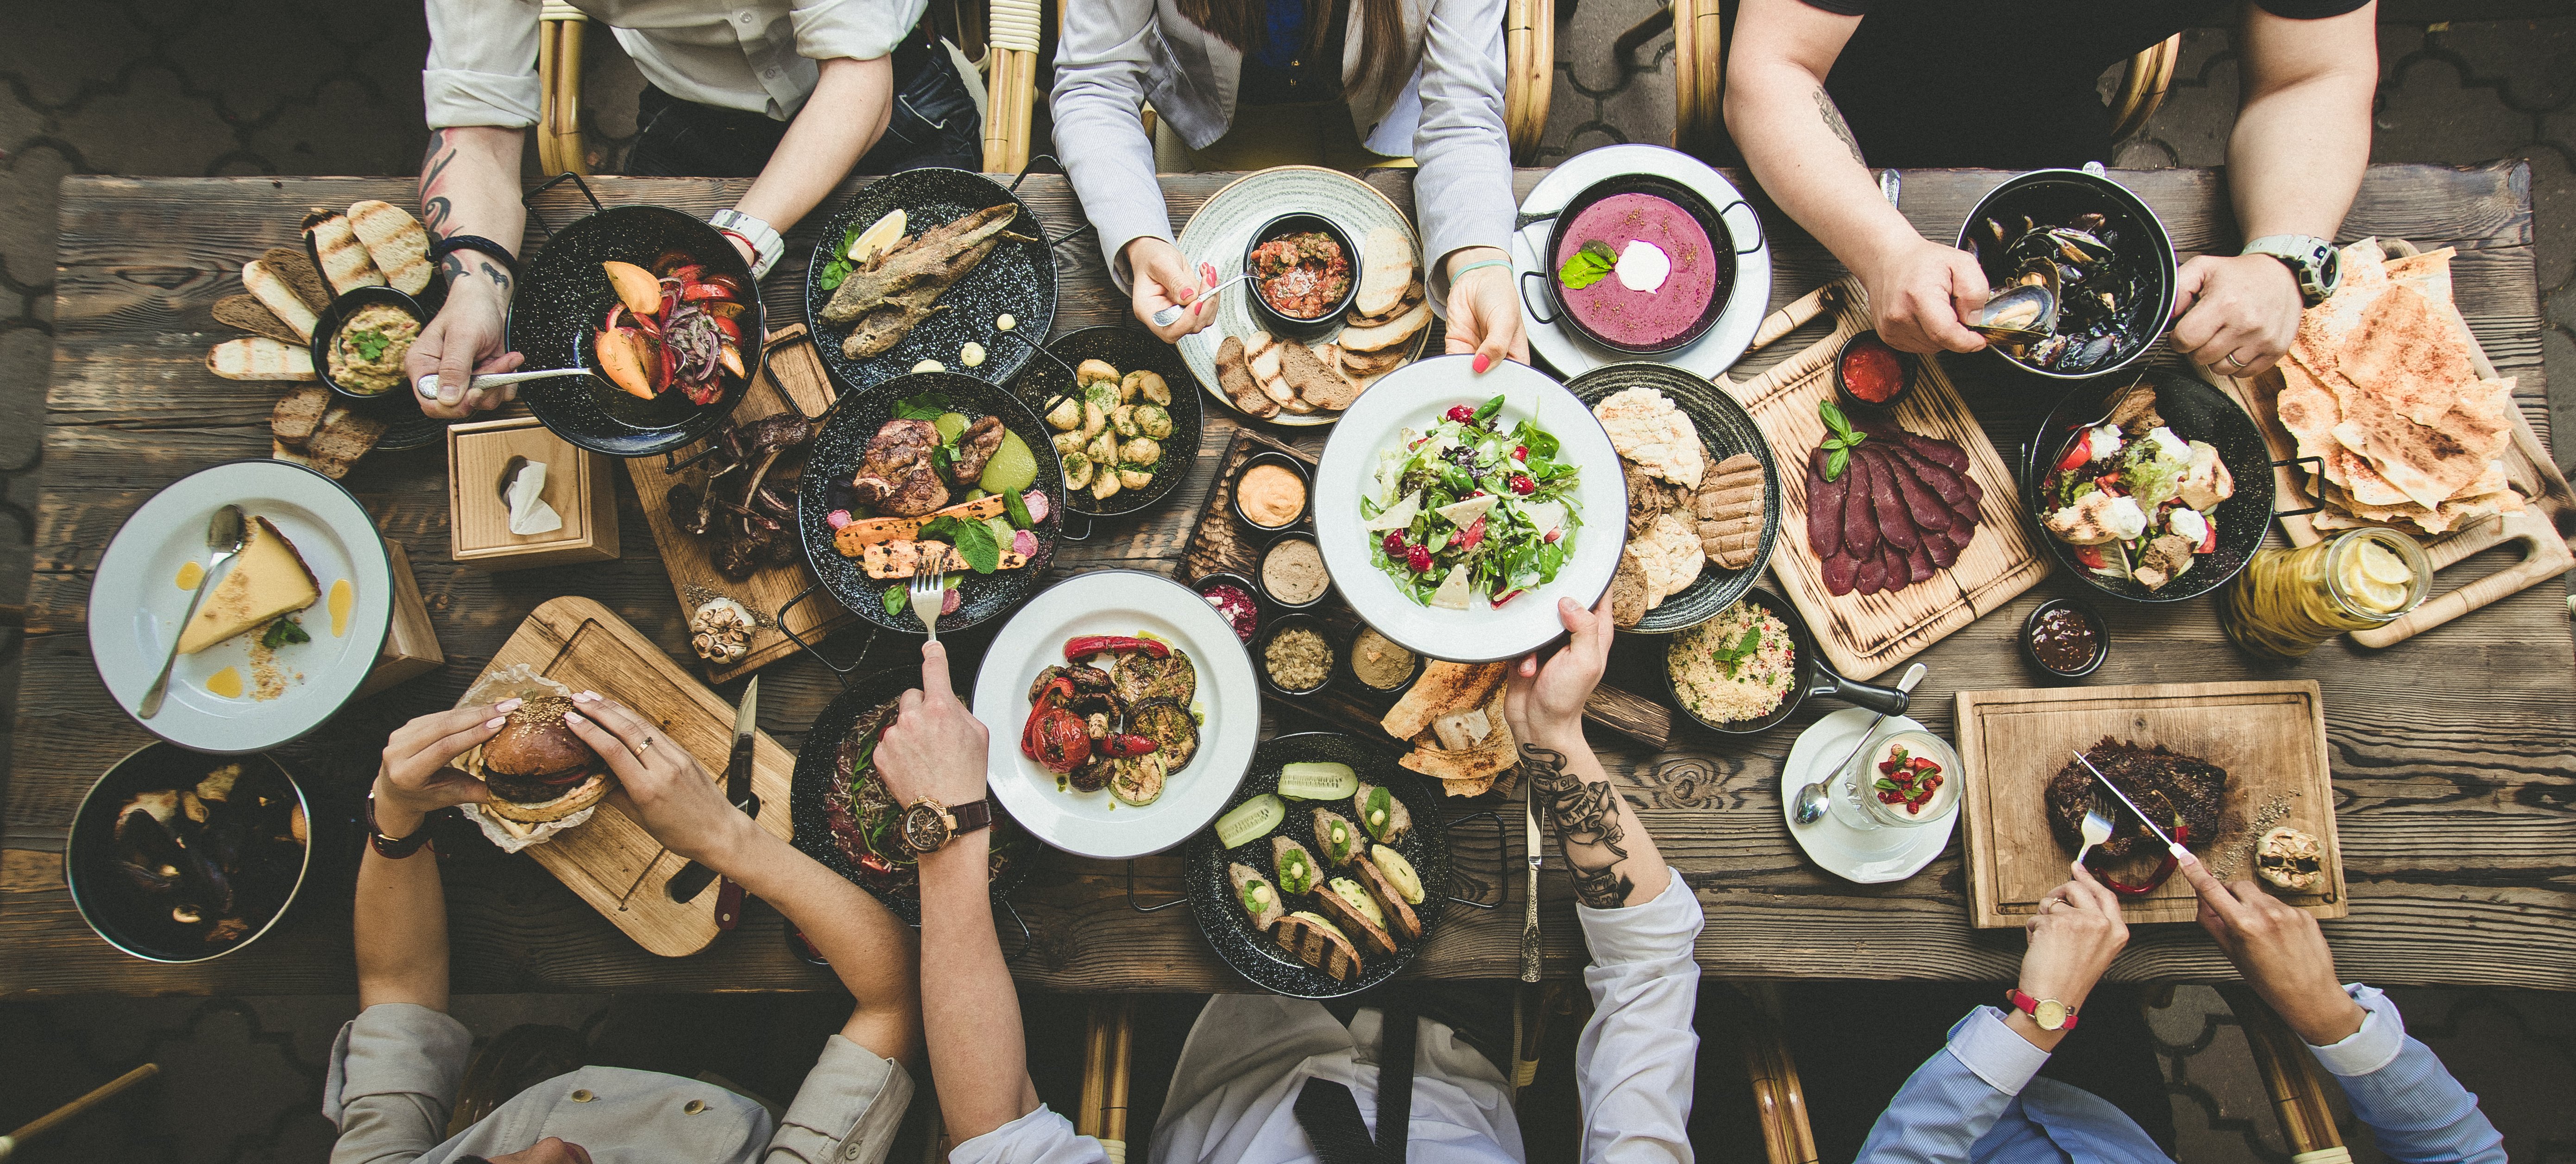 Comida en familia. | Foto: Shutterstock